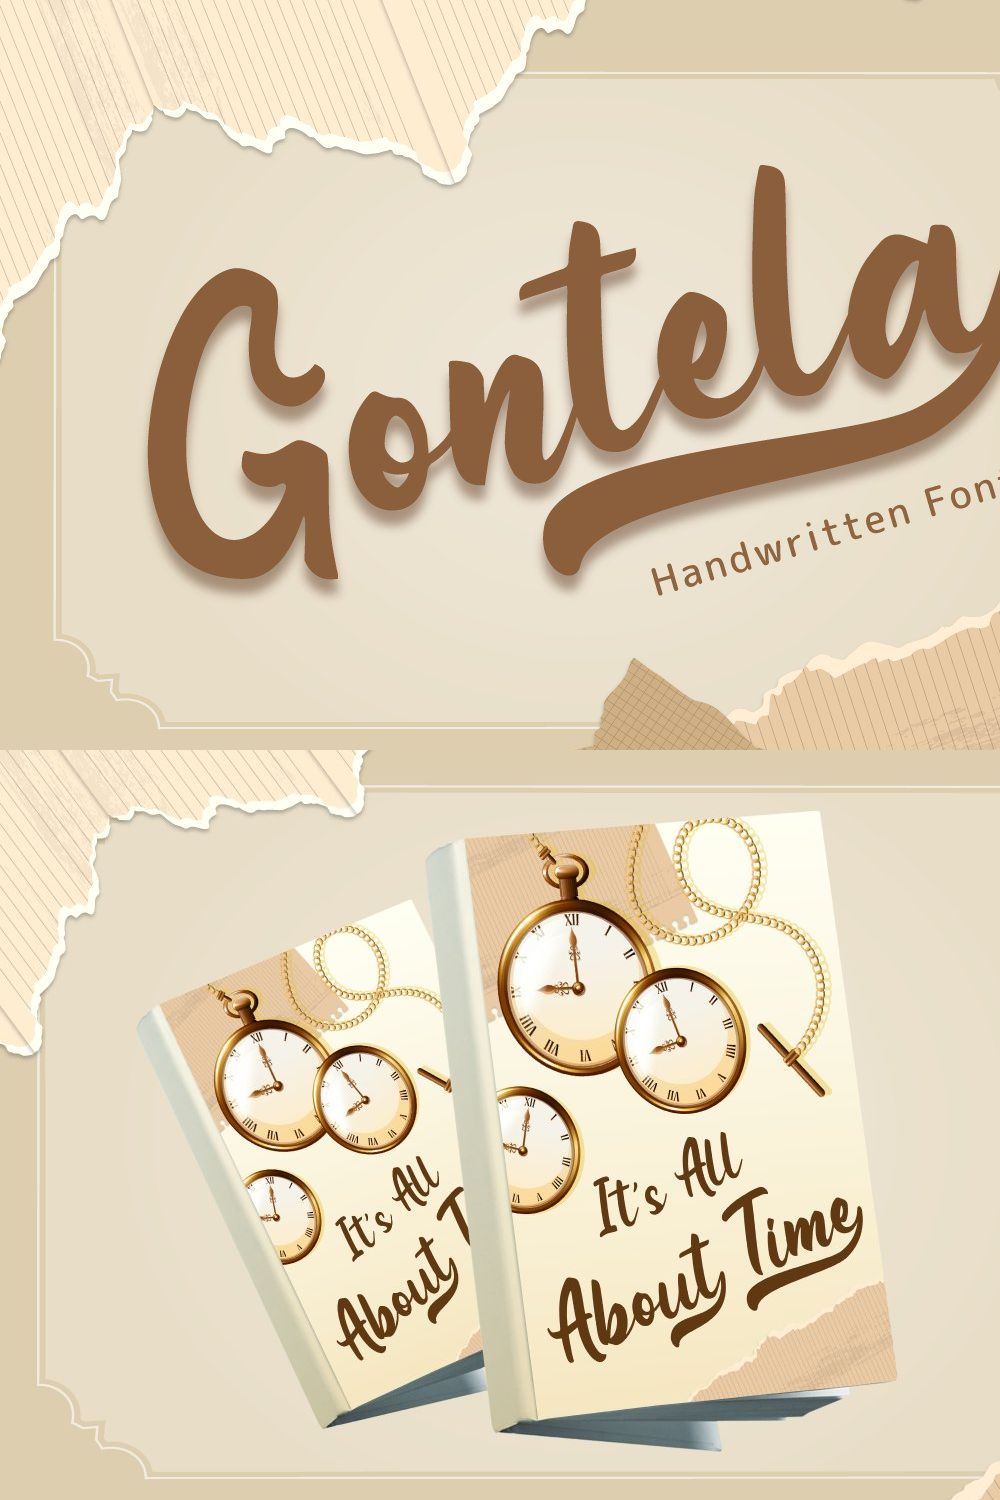 Gontela - Handwritten Font pinterest preview image.